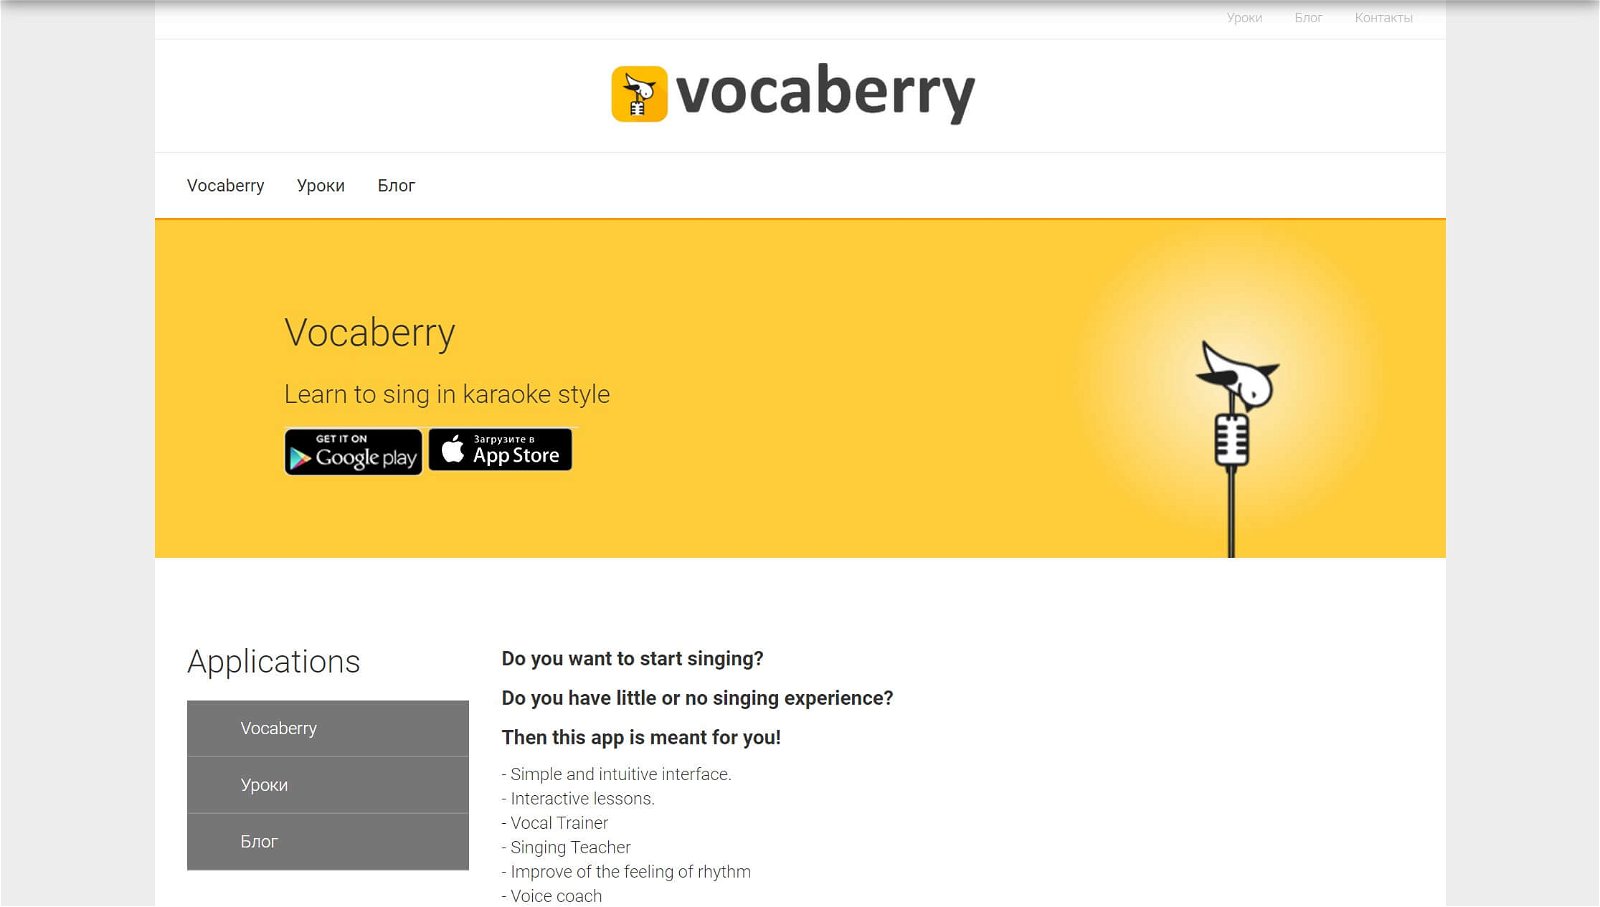 Vocal Range Vocaberry